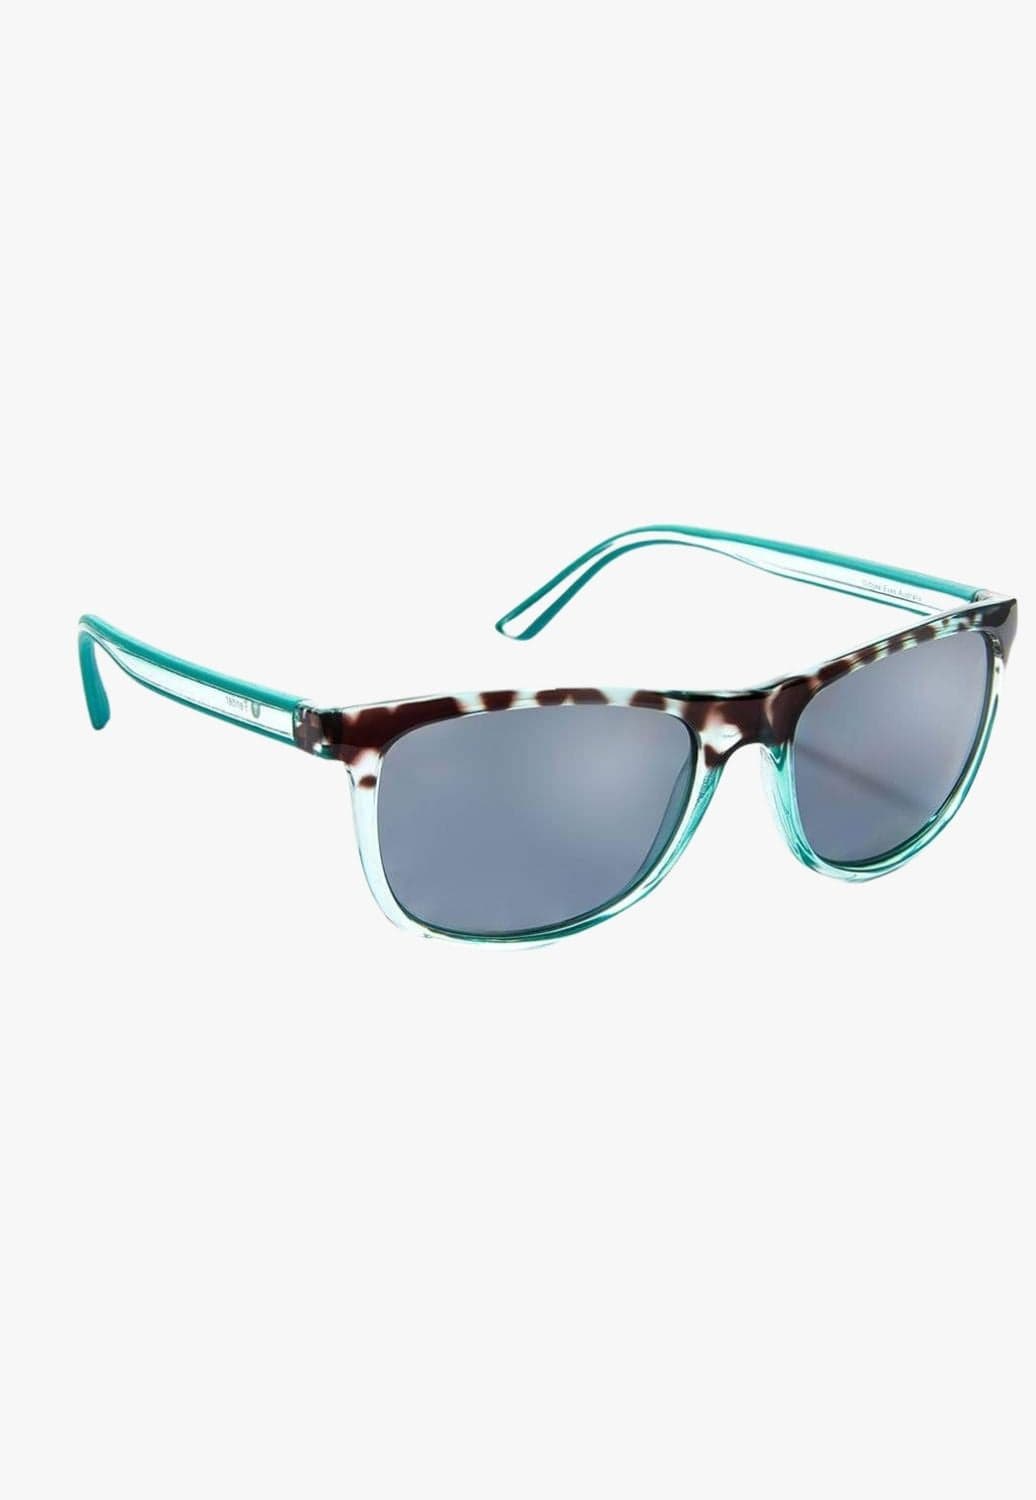 Gidgee Eyes ACCESSORIES-Sunglasses Tortoise Gidgee Eyes Fender Sunglasses